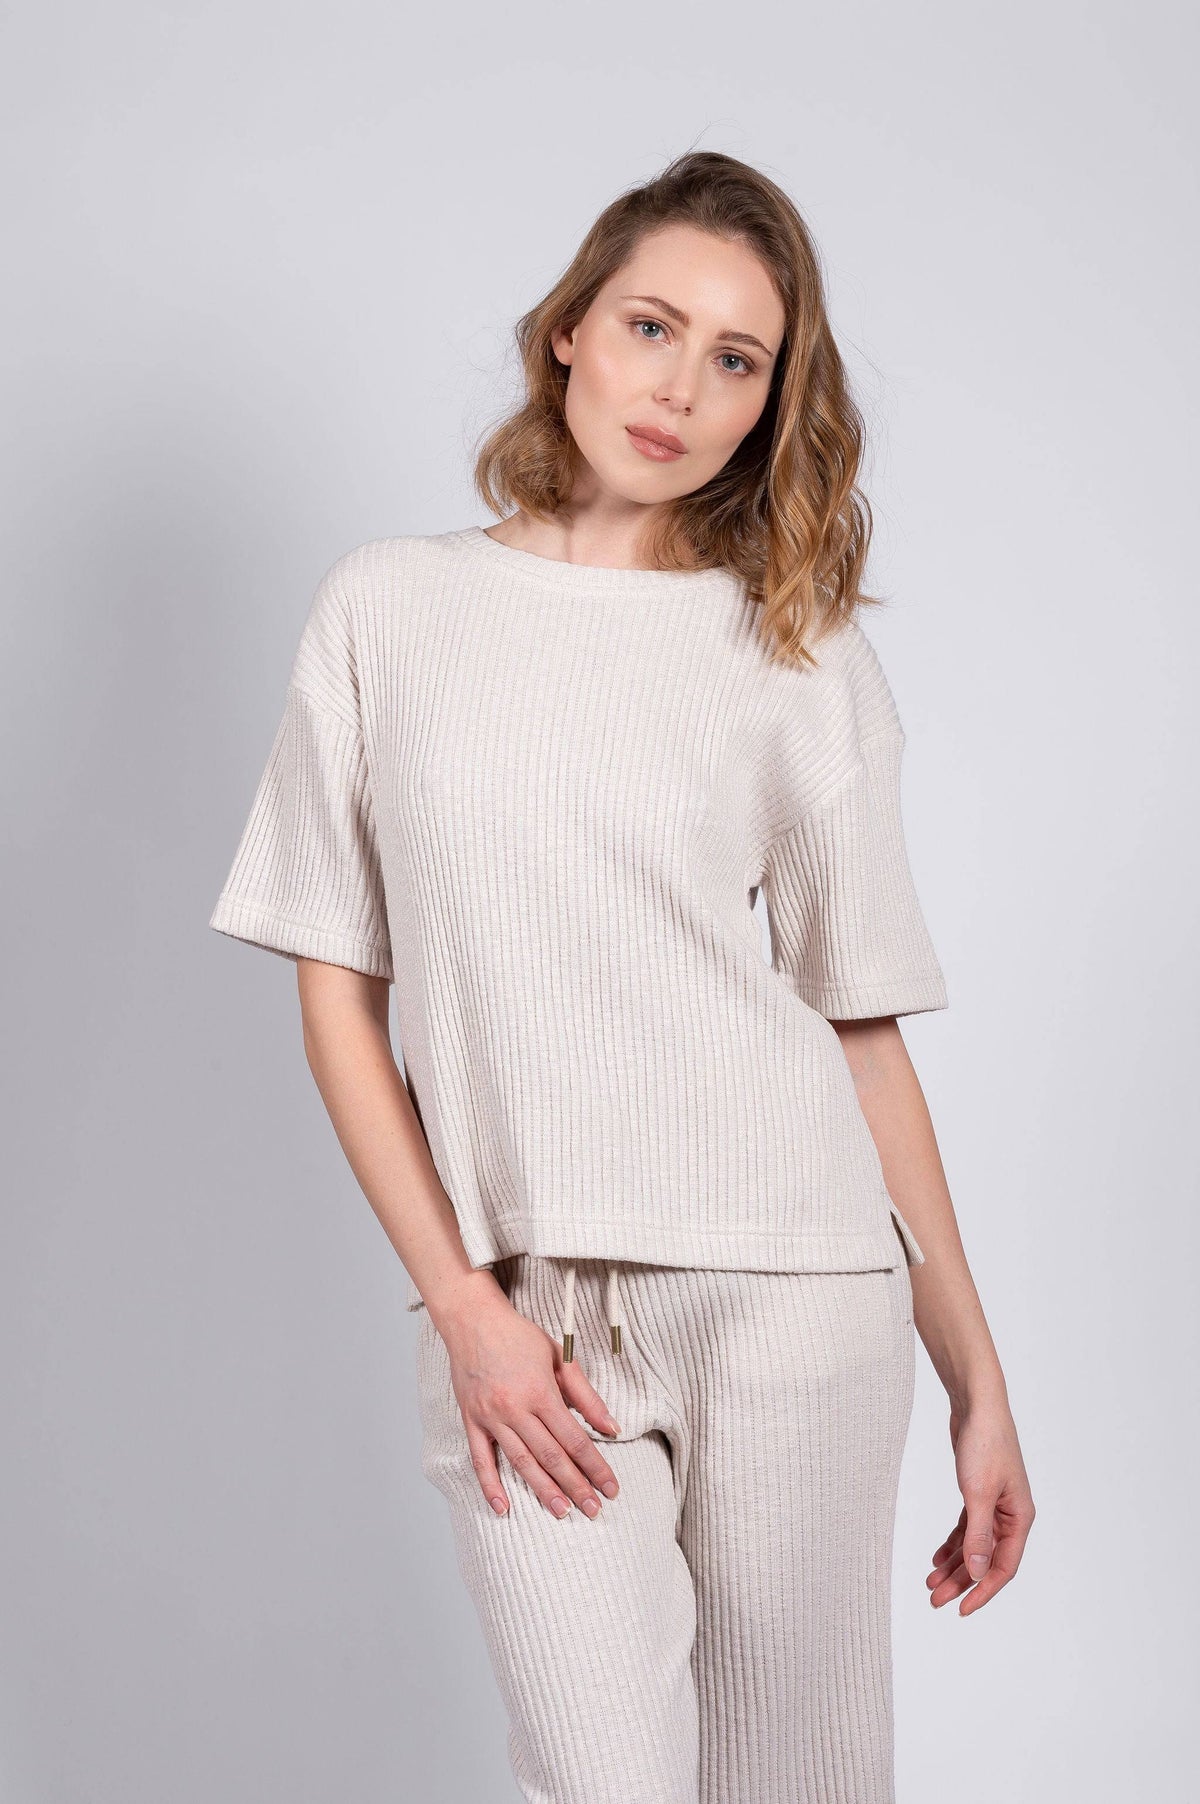 Sweater Rib Knit Tee - LATTELOVE Co.